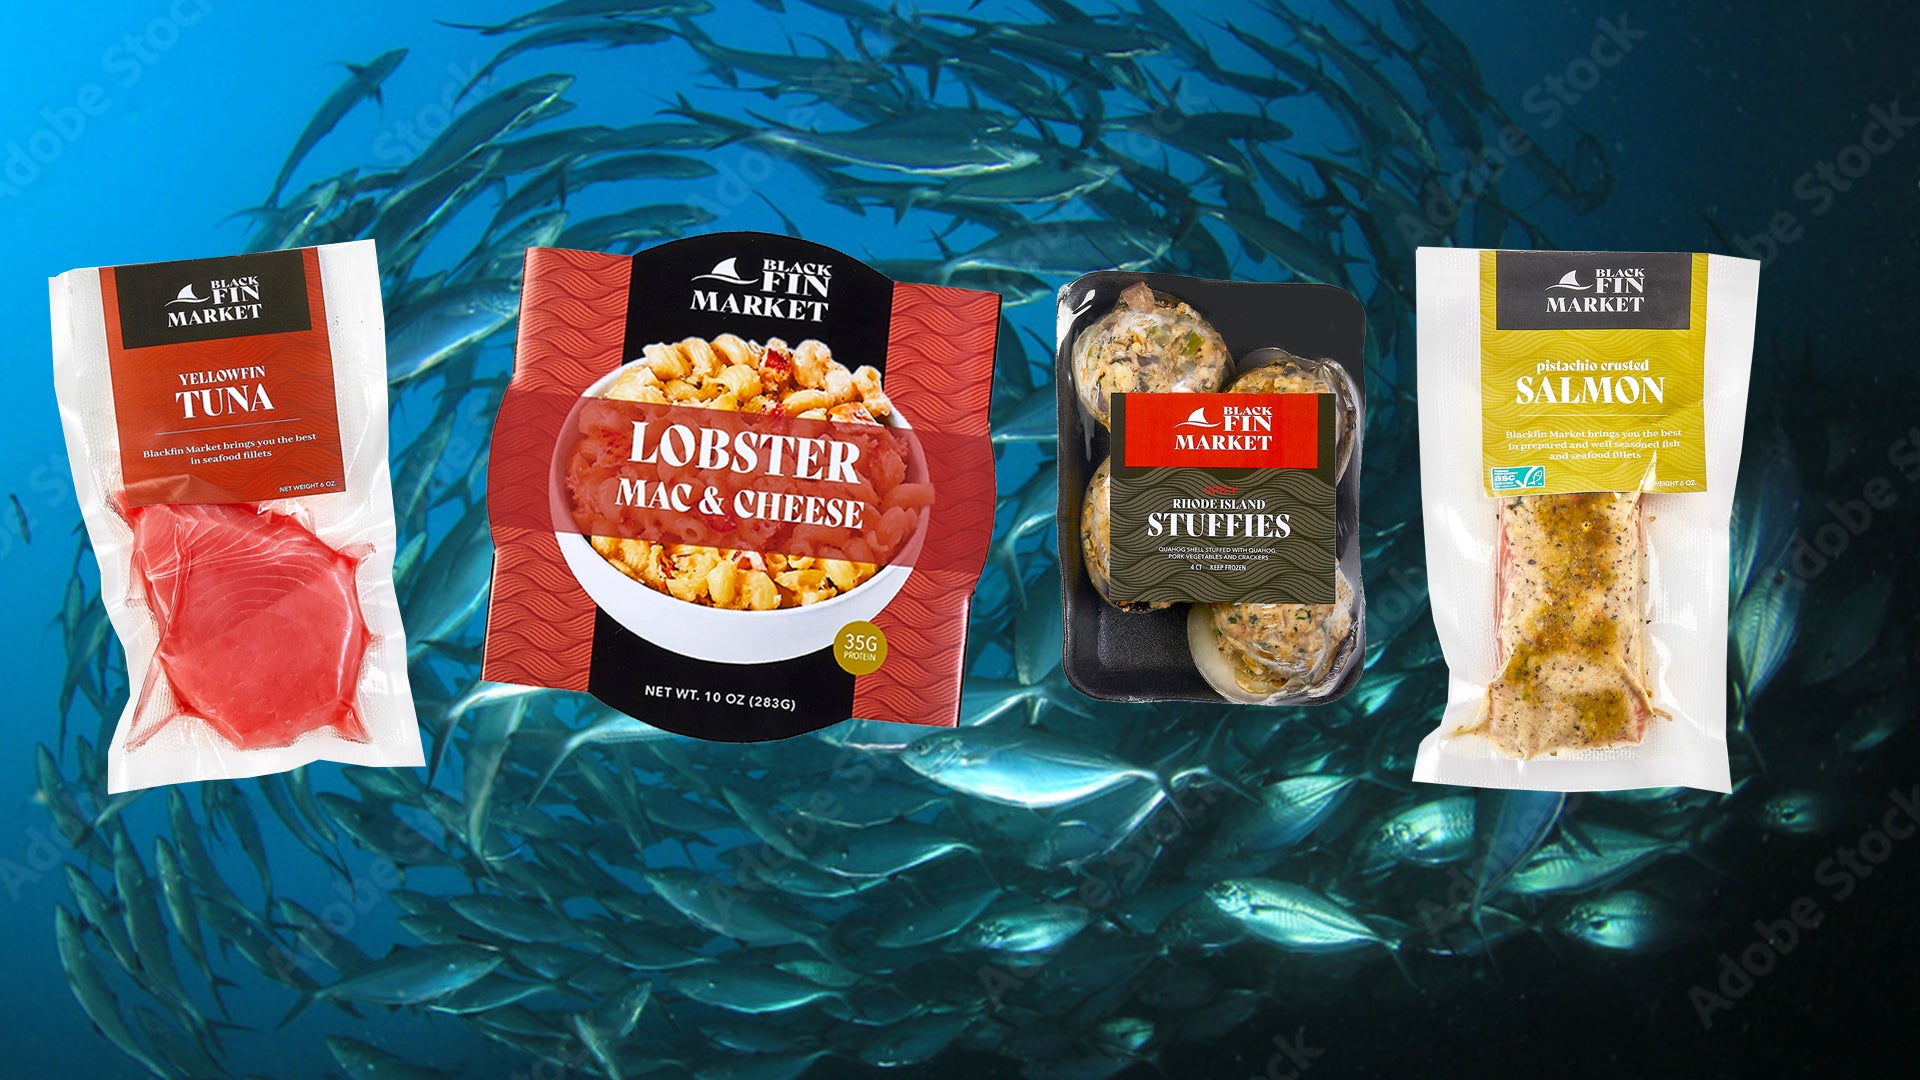 Buy Fresh Seafood Online | Blackfin Market
– black-fin-market
